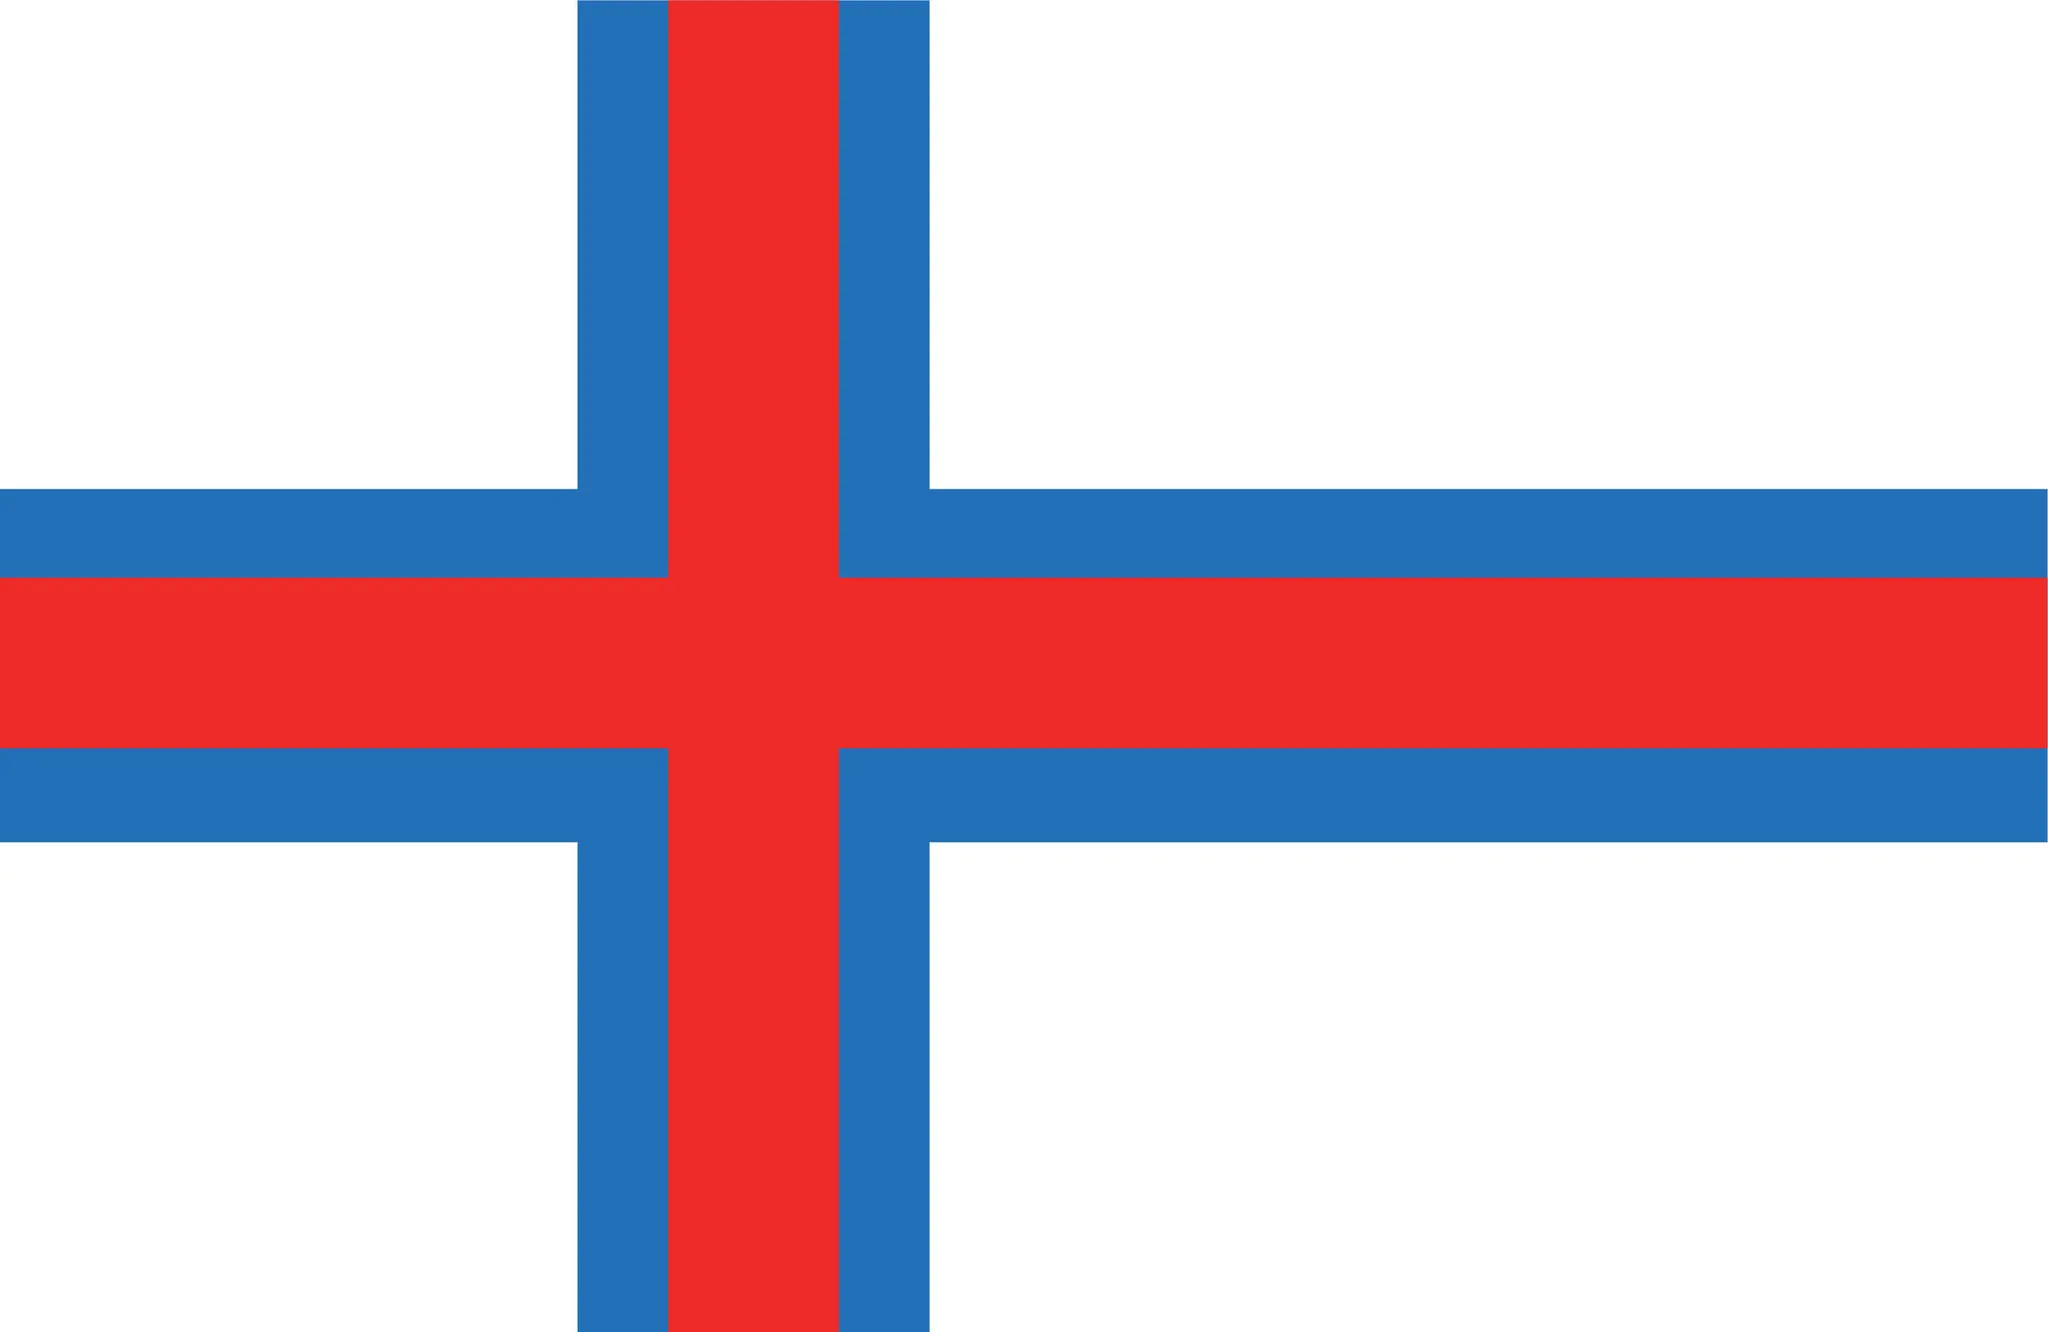 Flag of Faroe Islands